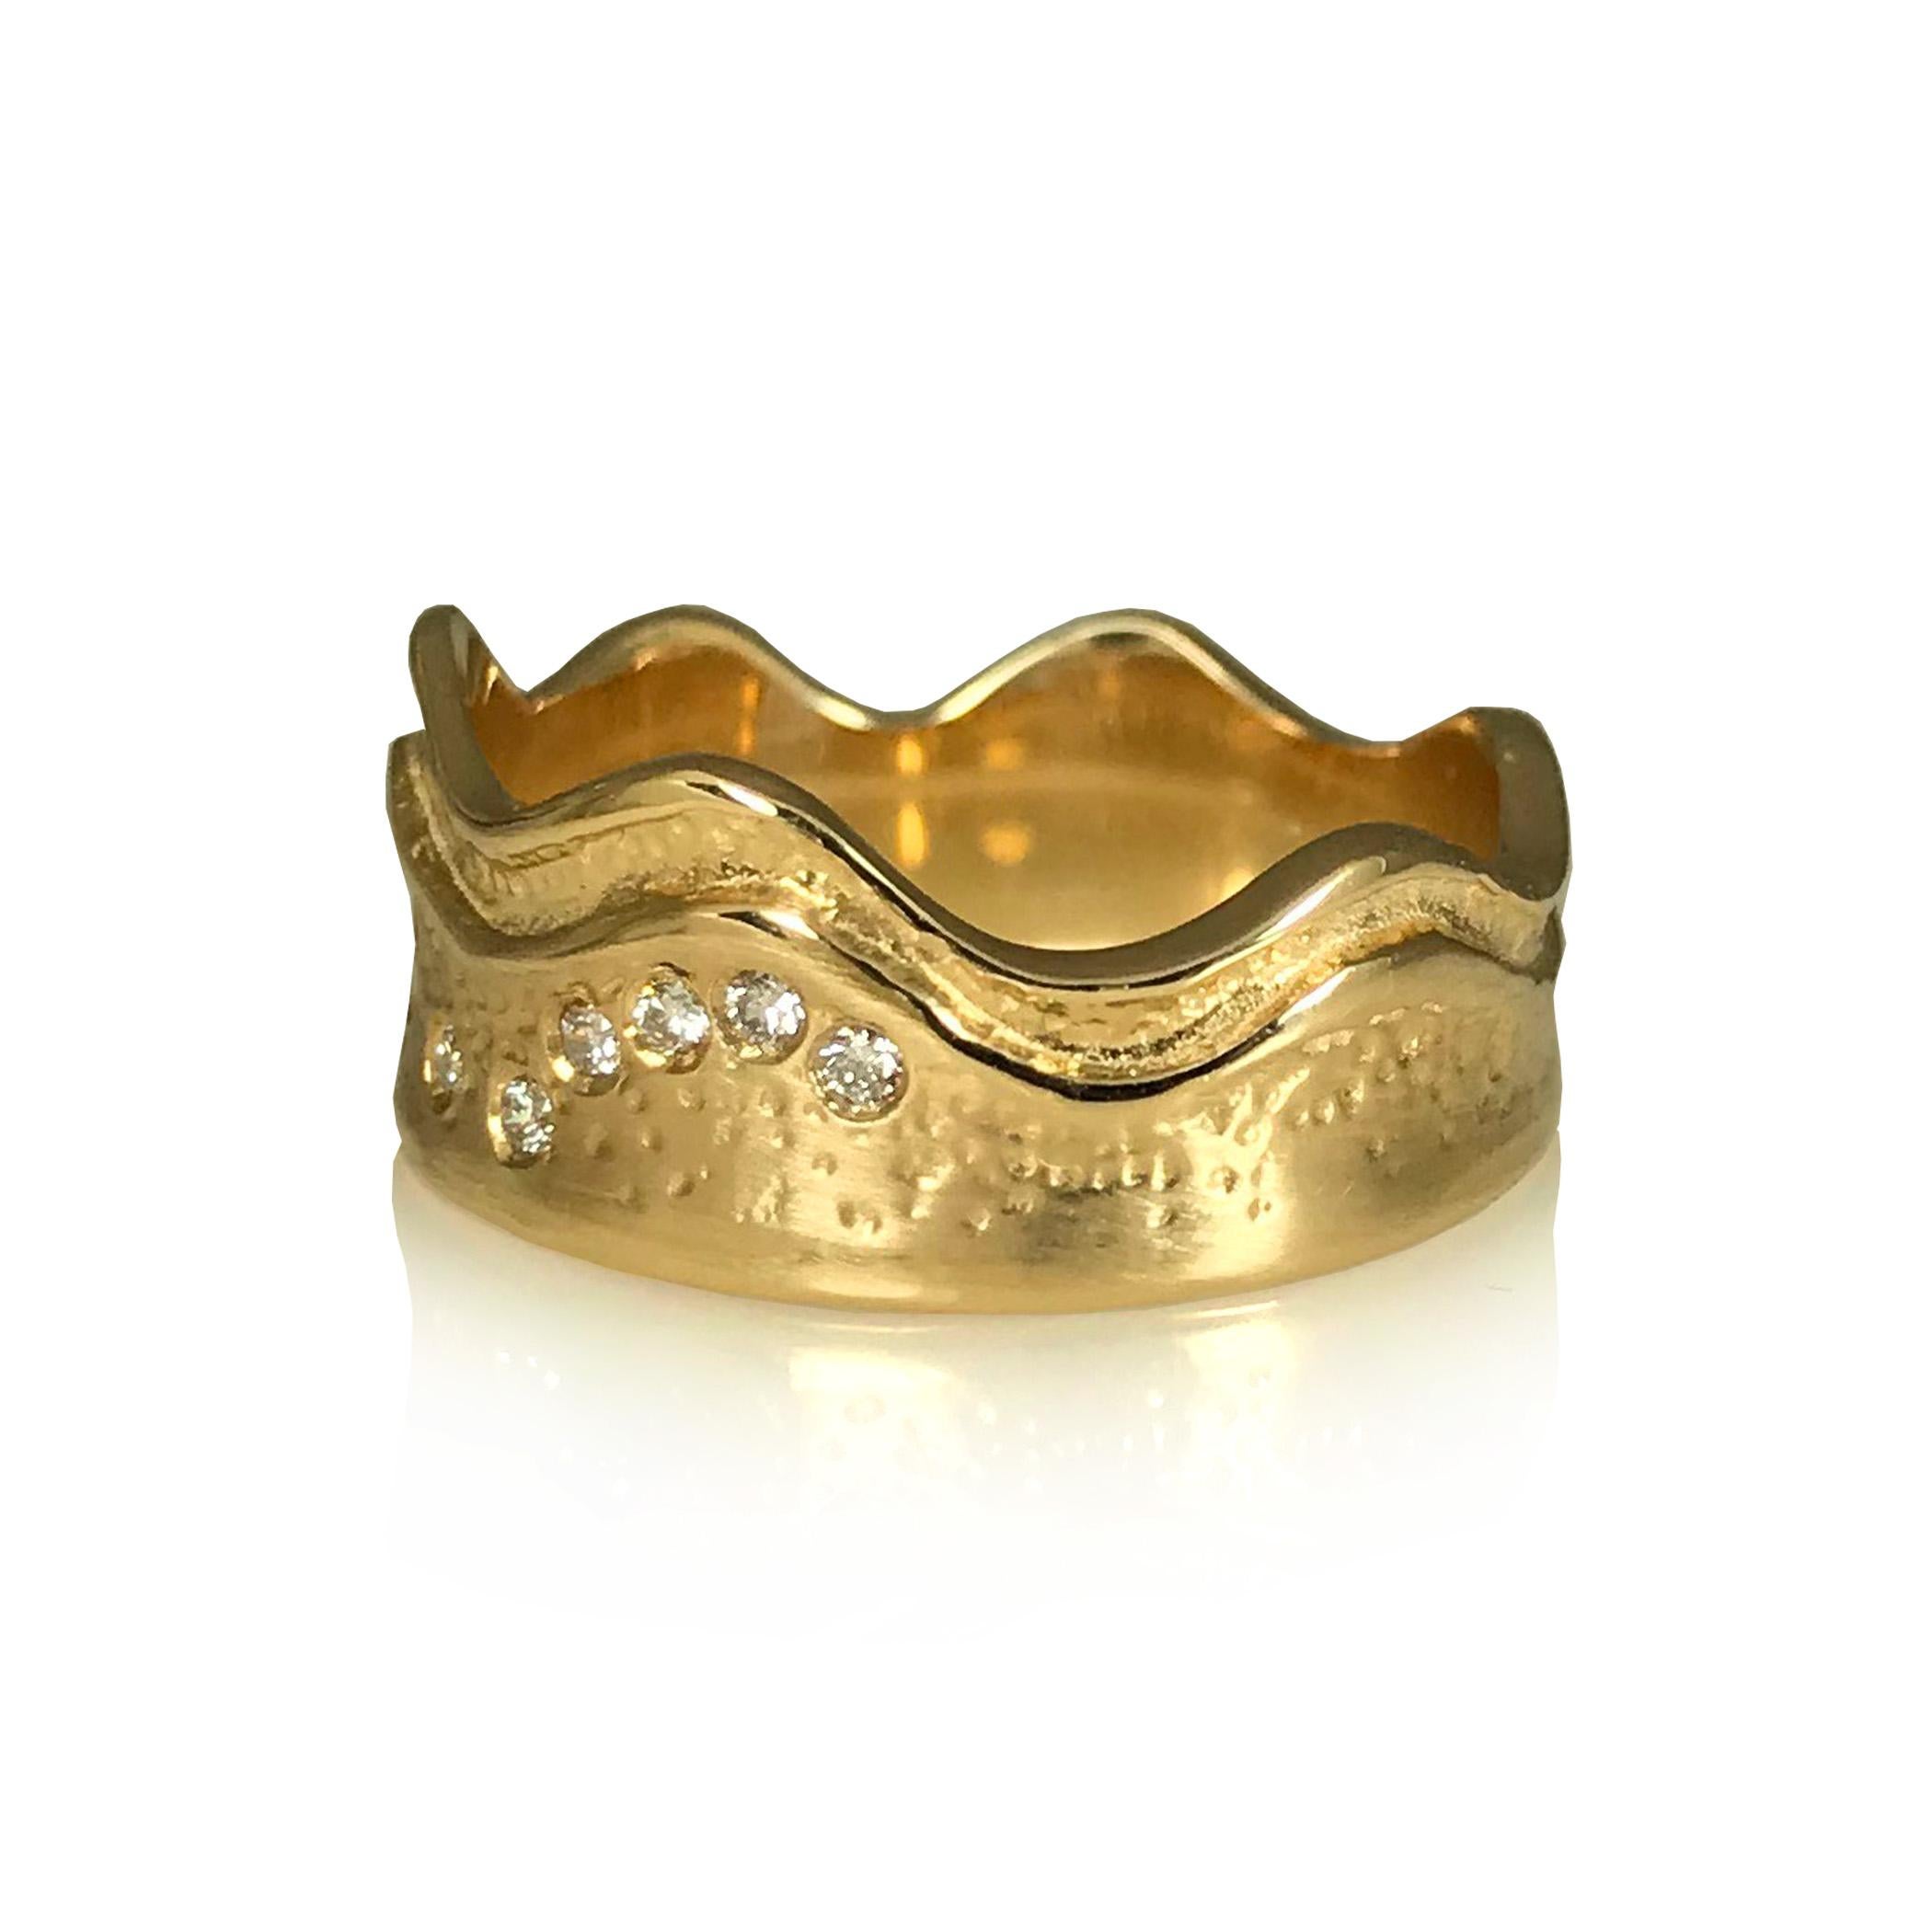 For Sale:  Small 14 Karat Yellow Gold Shoreline Ring with Diamonds from Keiko Mita 2